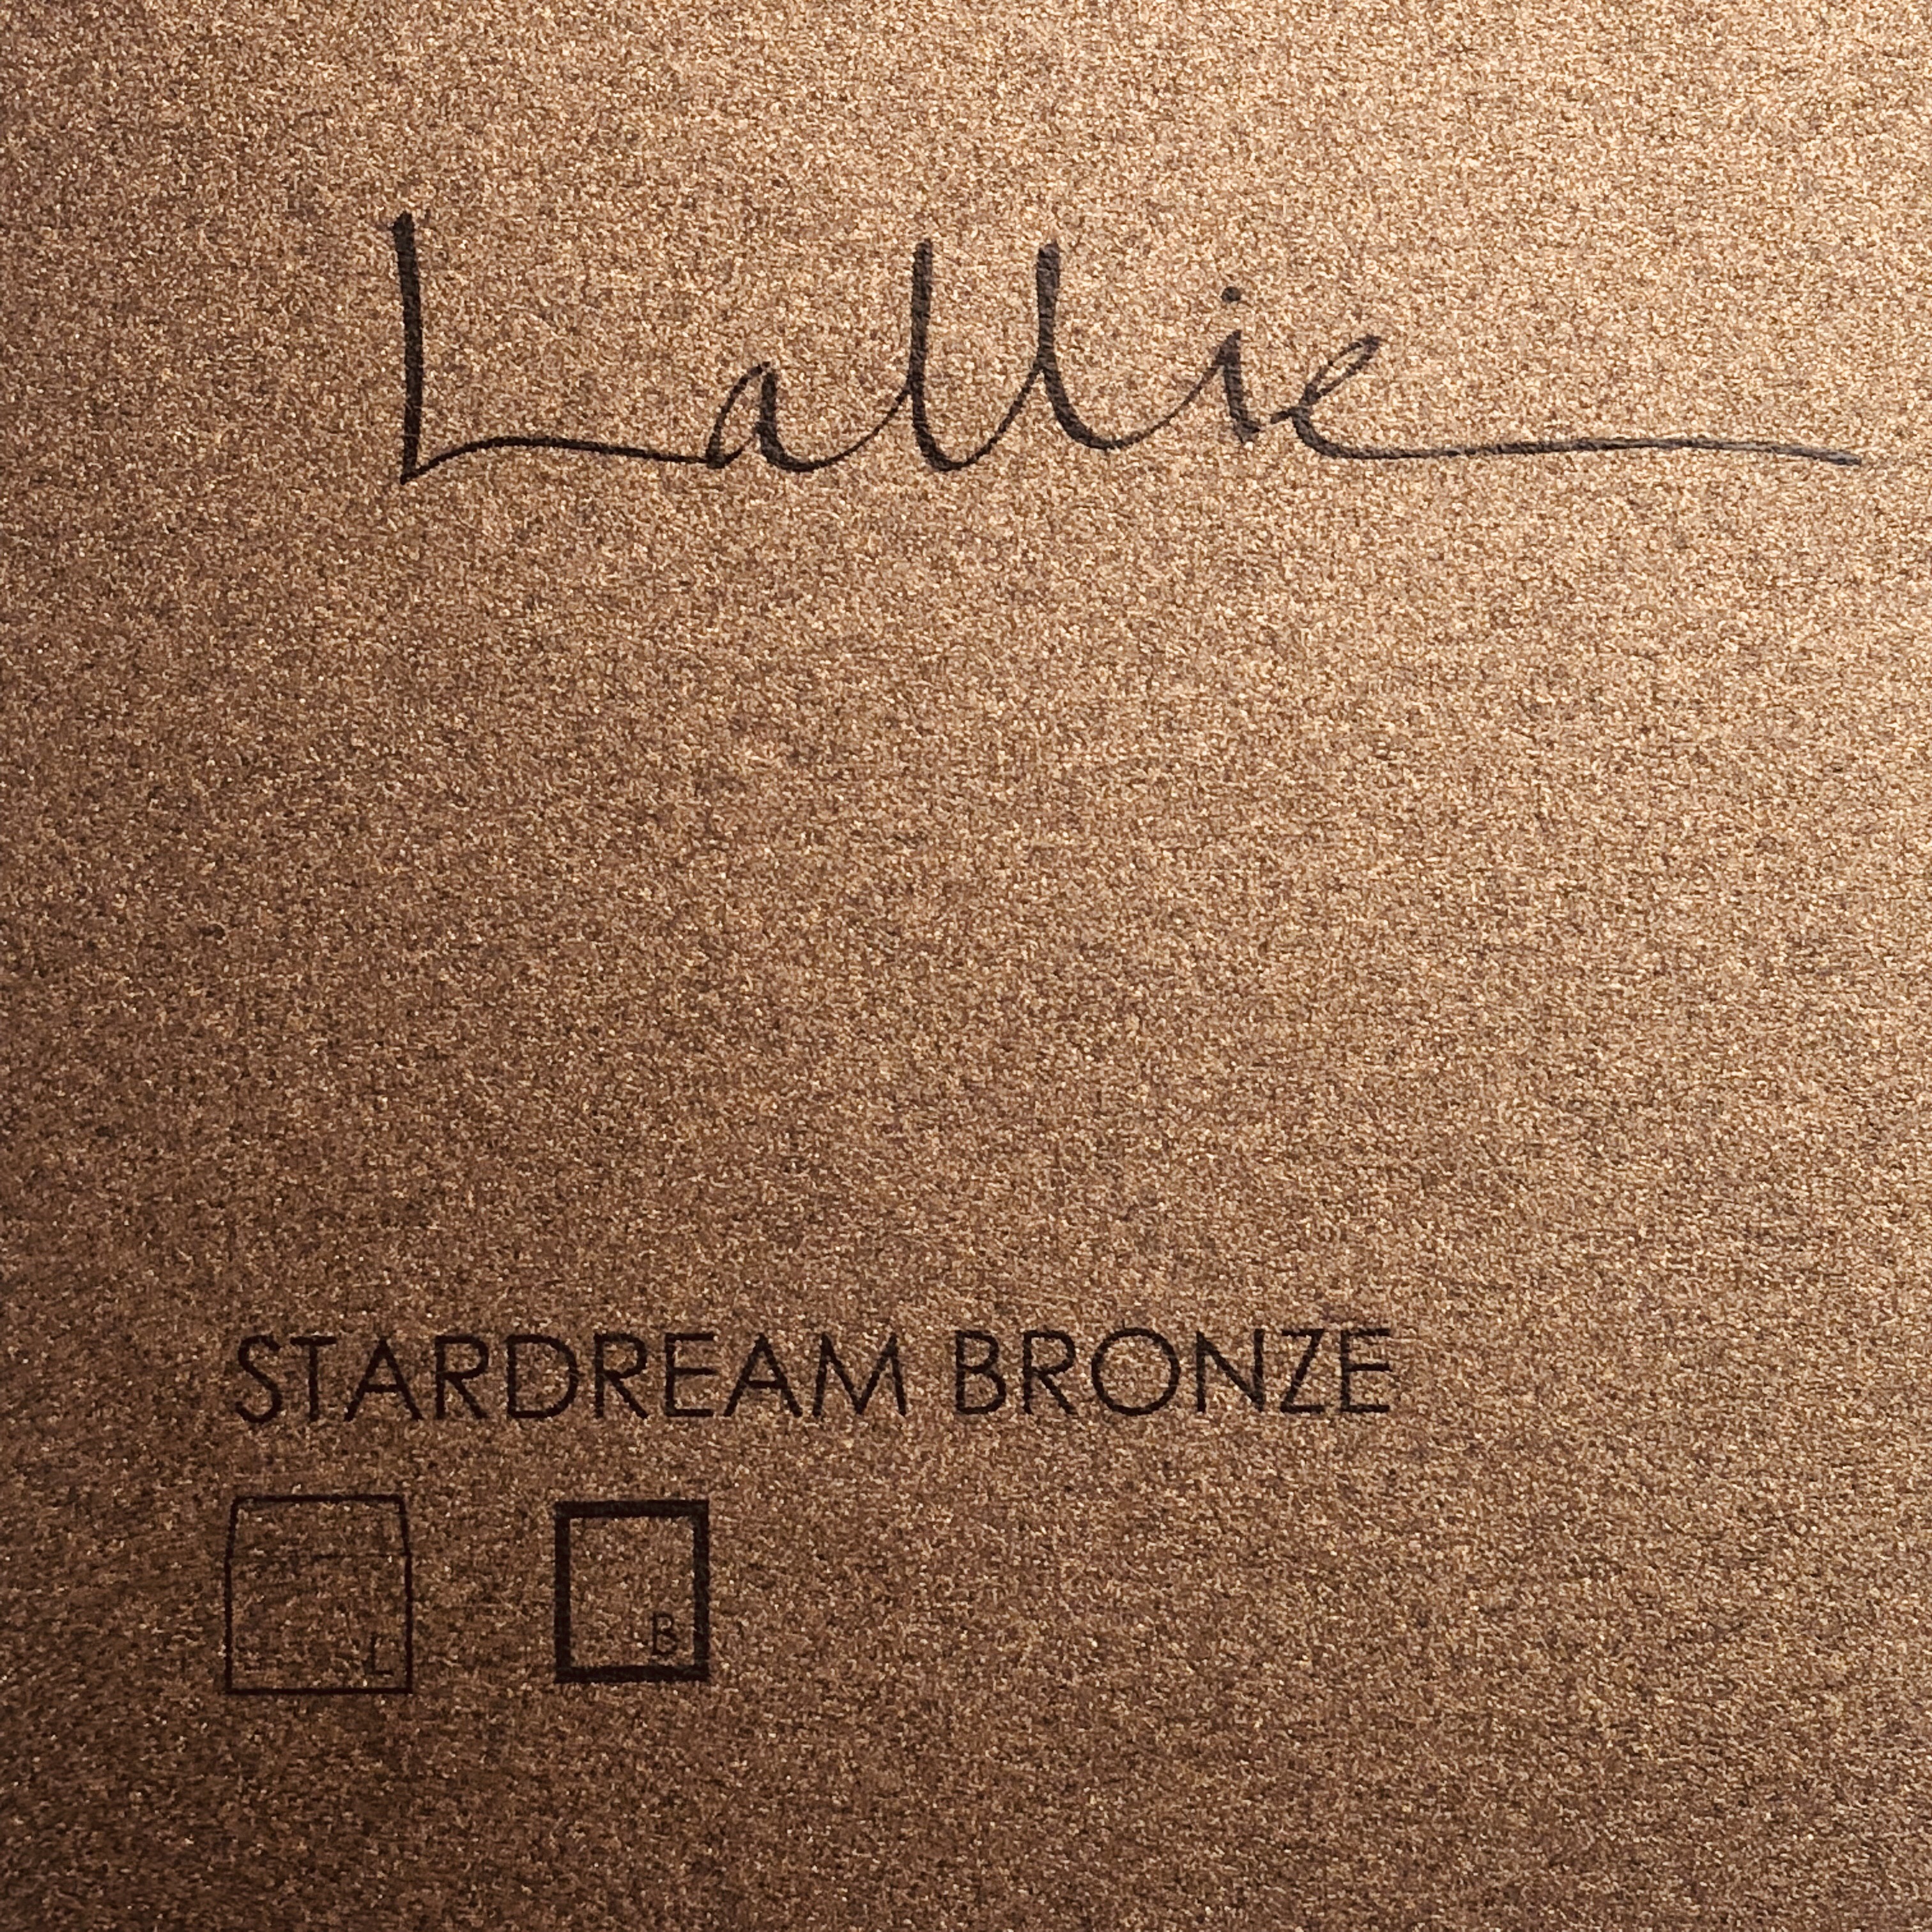 Stardream Bronze (metallic)